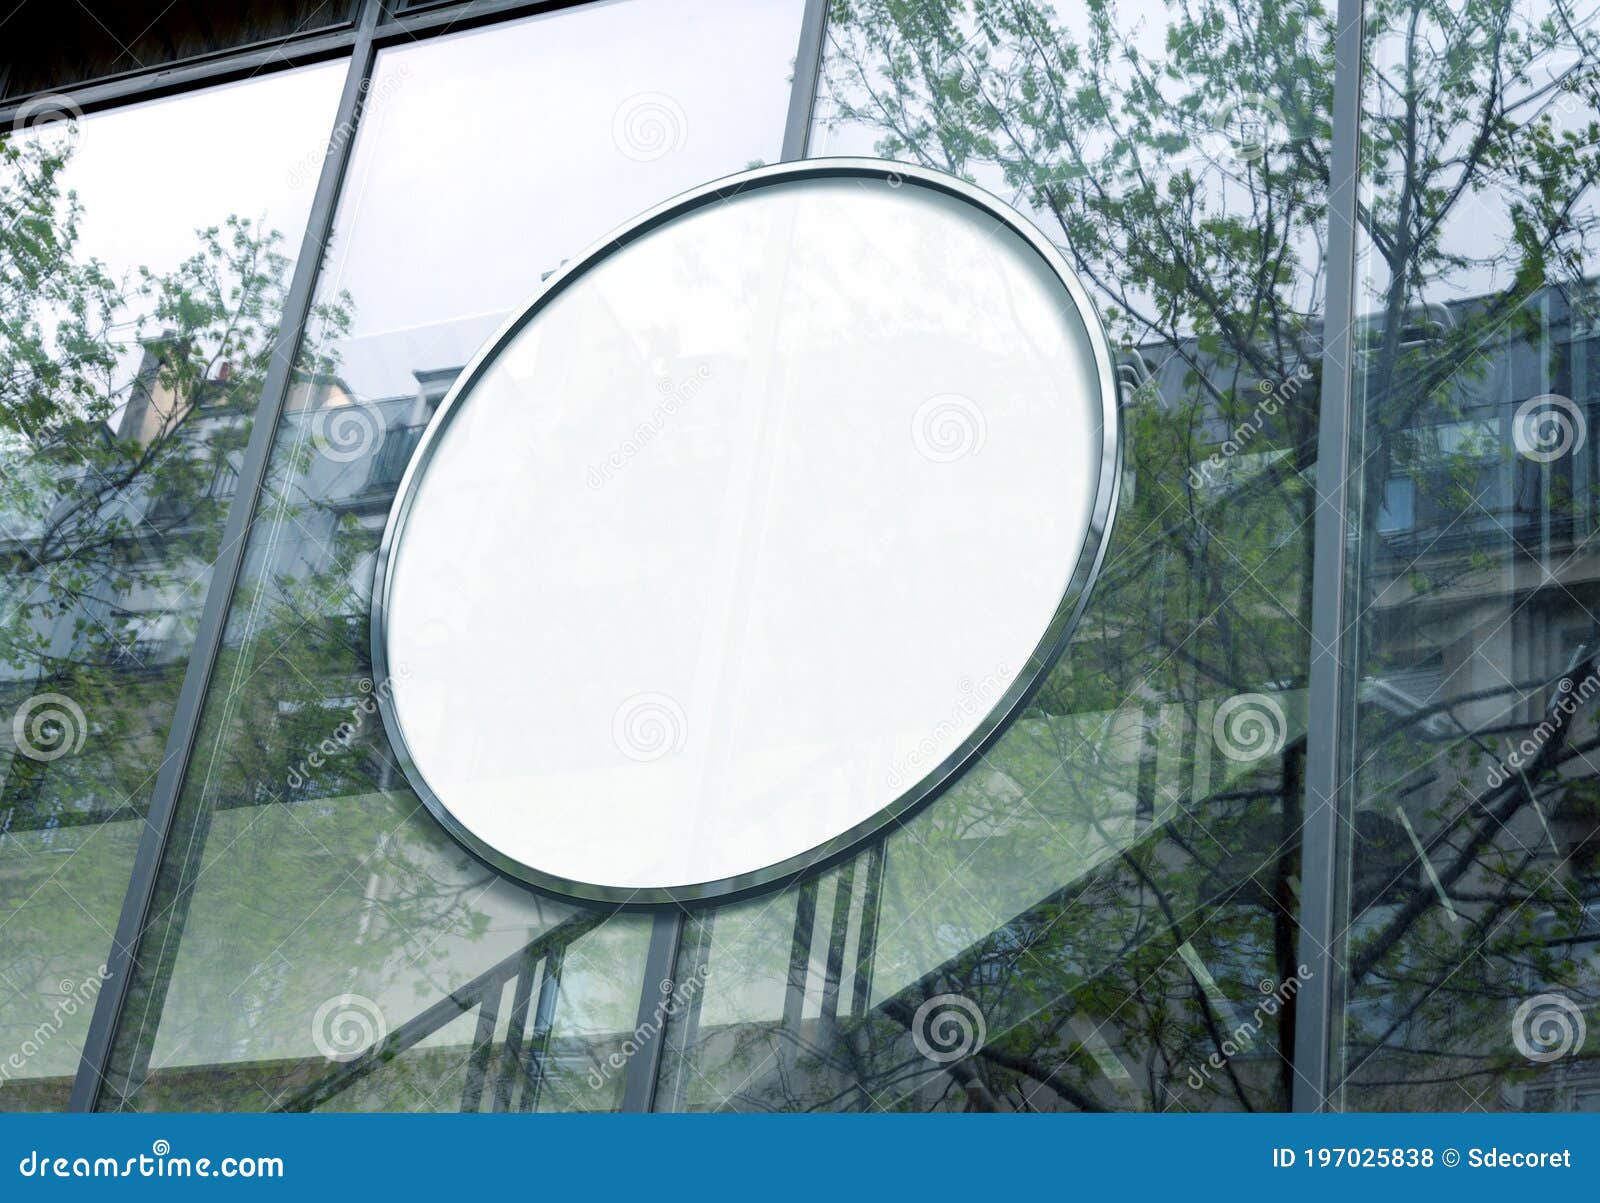 circular billboard mockup on glass window. round empty frame on company building frontage